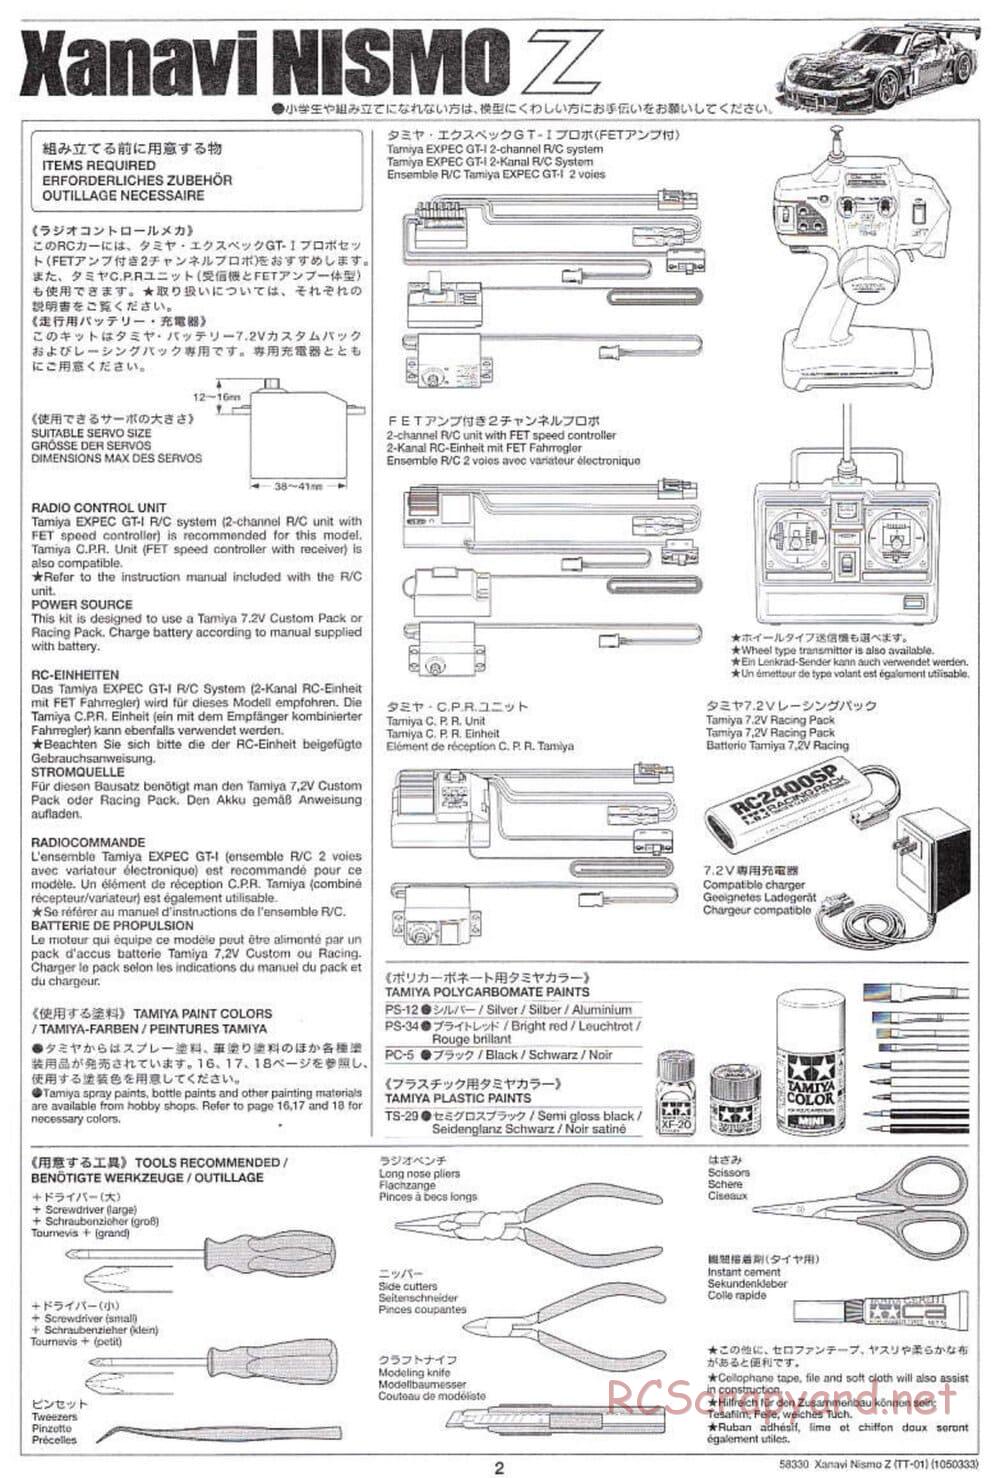 Tamiya - Xanavi Nismo Z - TT-01 Chassis - Manual - Page 2